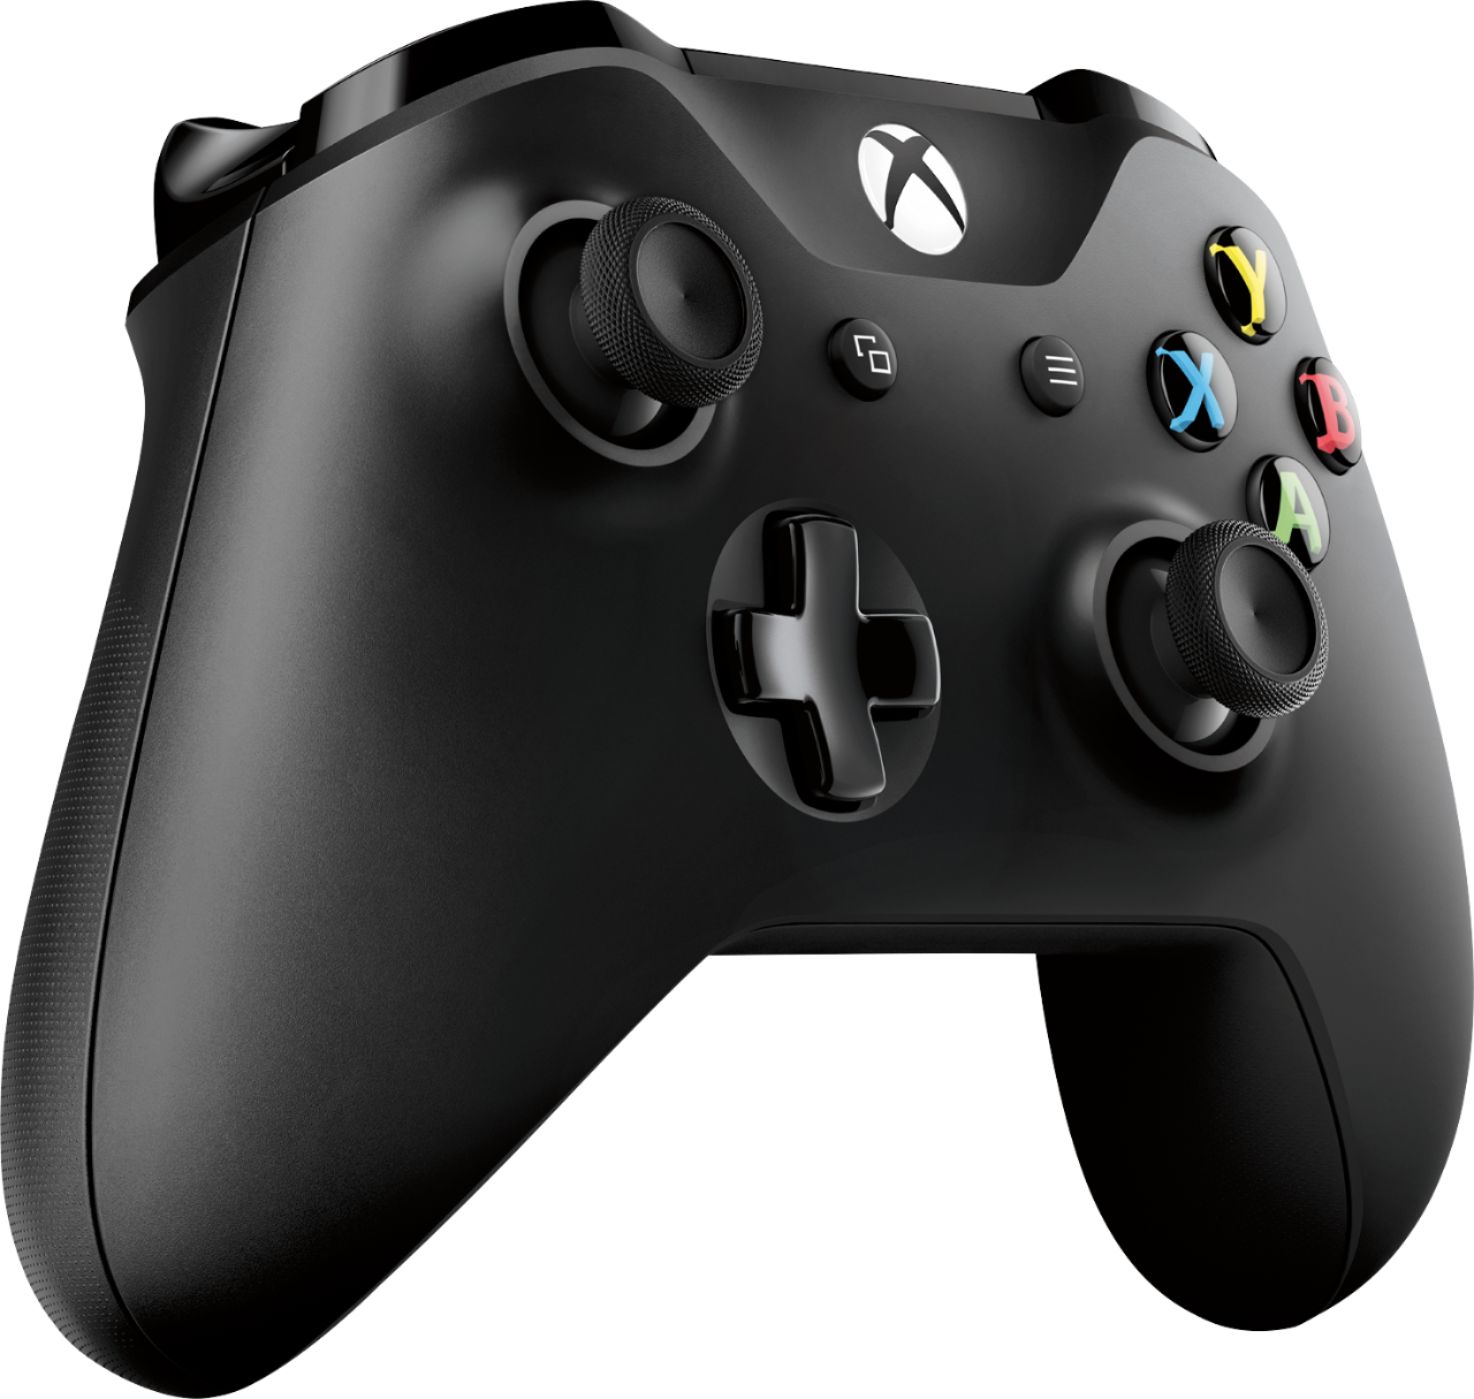 Angle View: Microsoft Xbox One Bluetooth Wireless Controller, Black